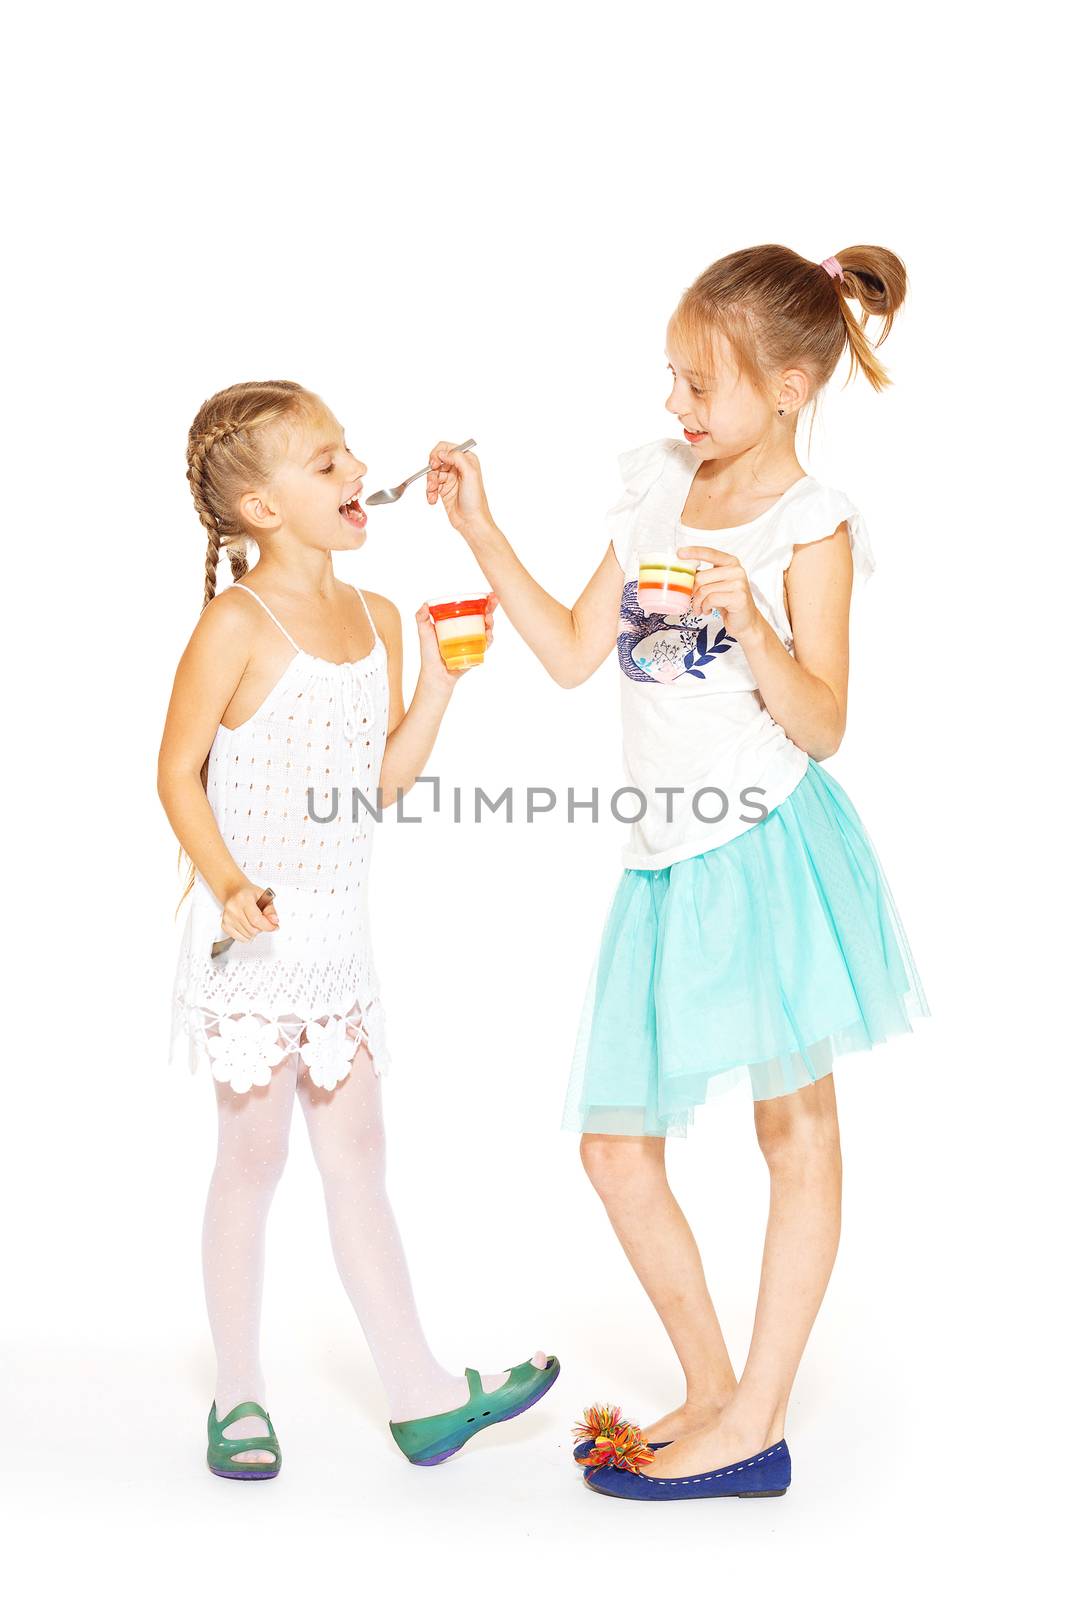 Little girls eating jello by gorov108